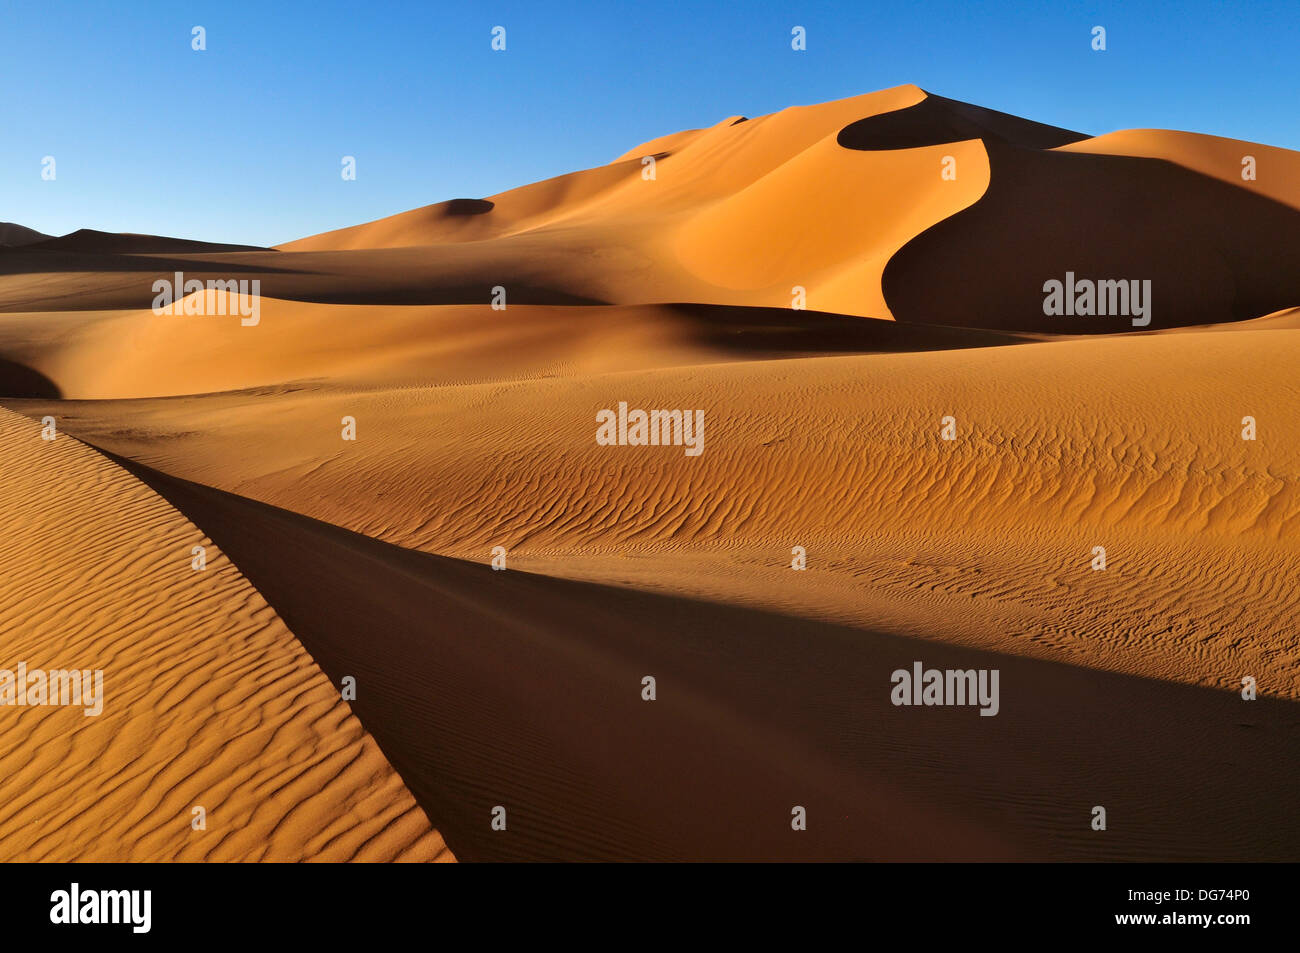 Adrar algeria hi-res stock photography and images - Alamy